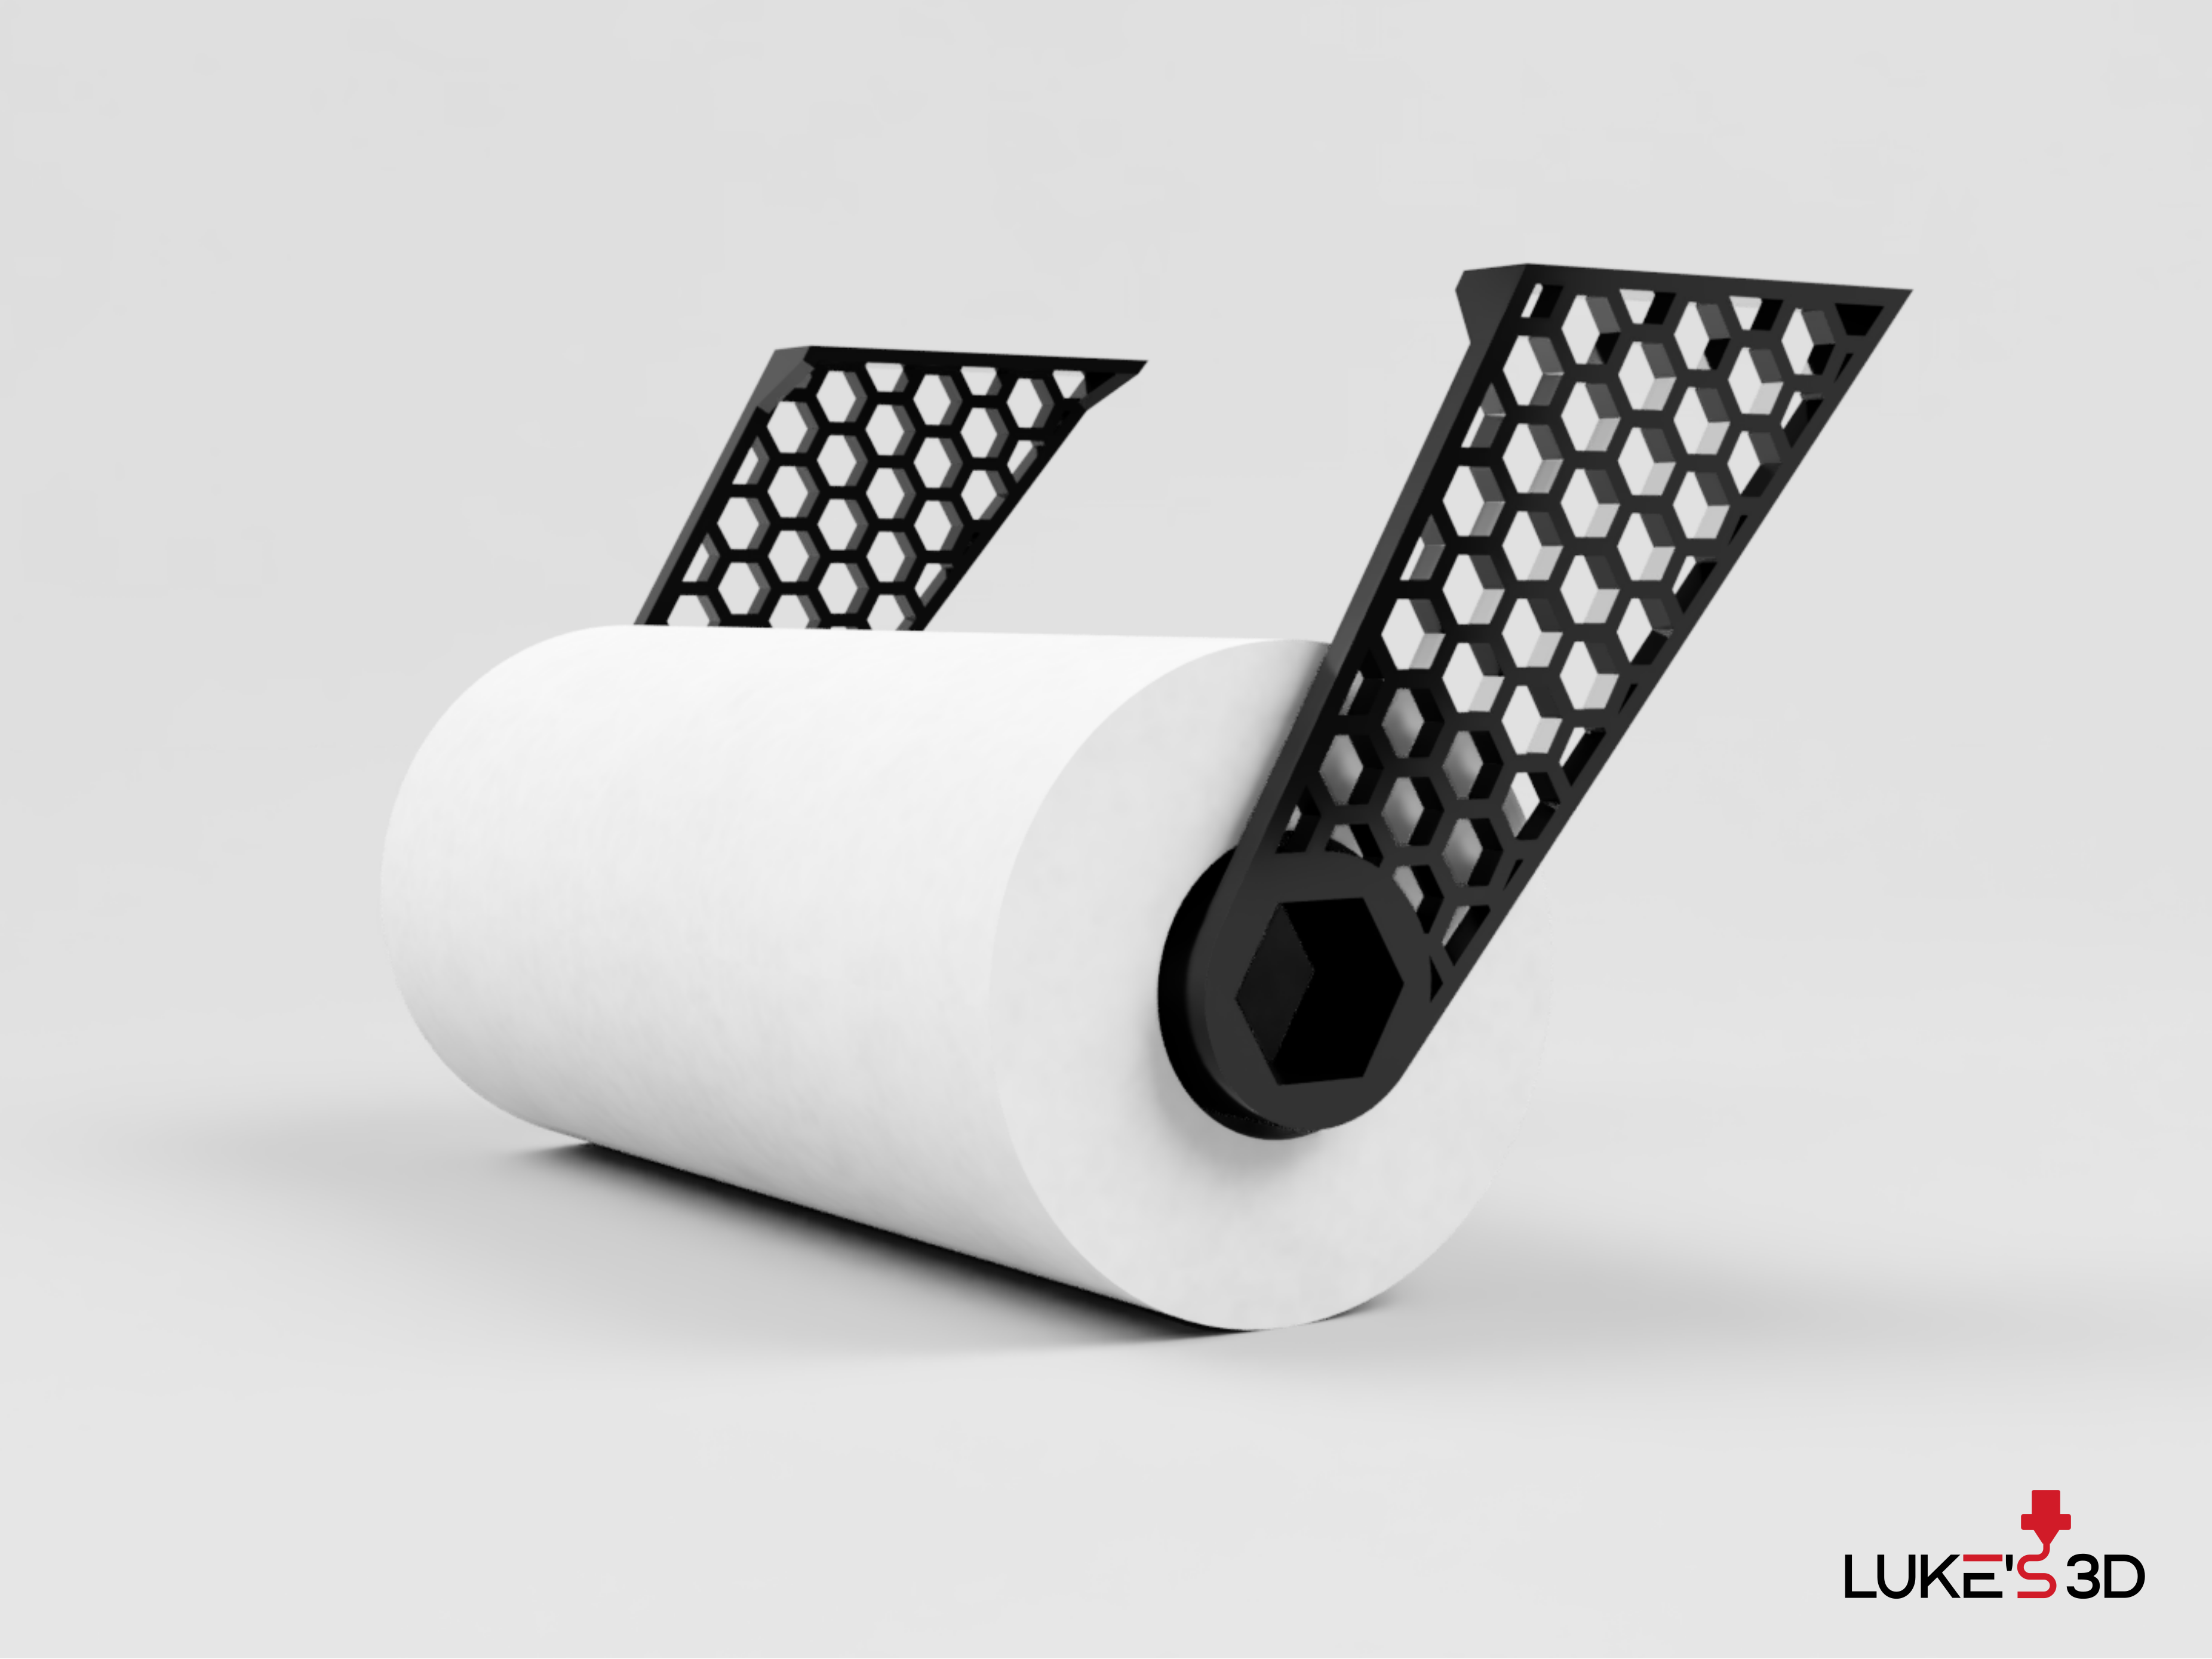 Hexagonal paper towel holder